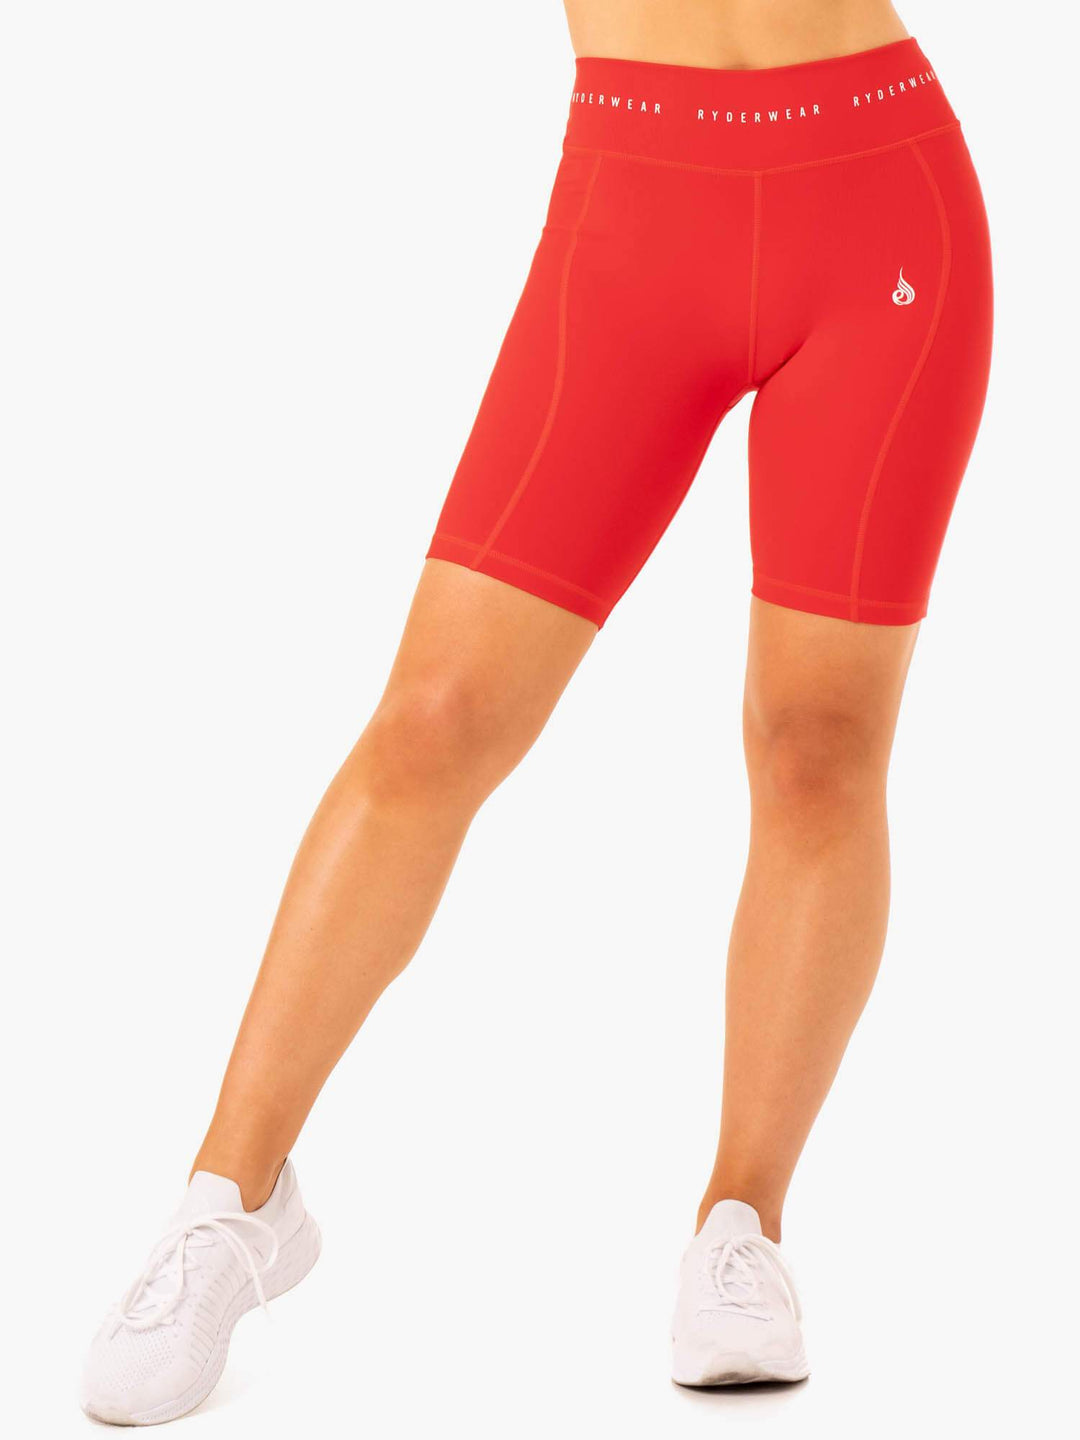 Reflex High Waisted Bike Shorts - Red Clothing Ryderwear 